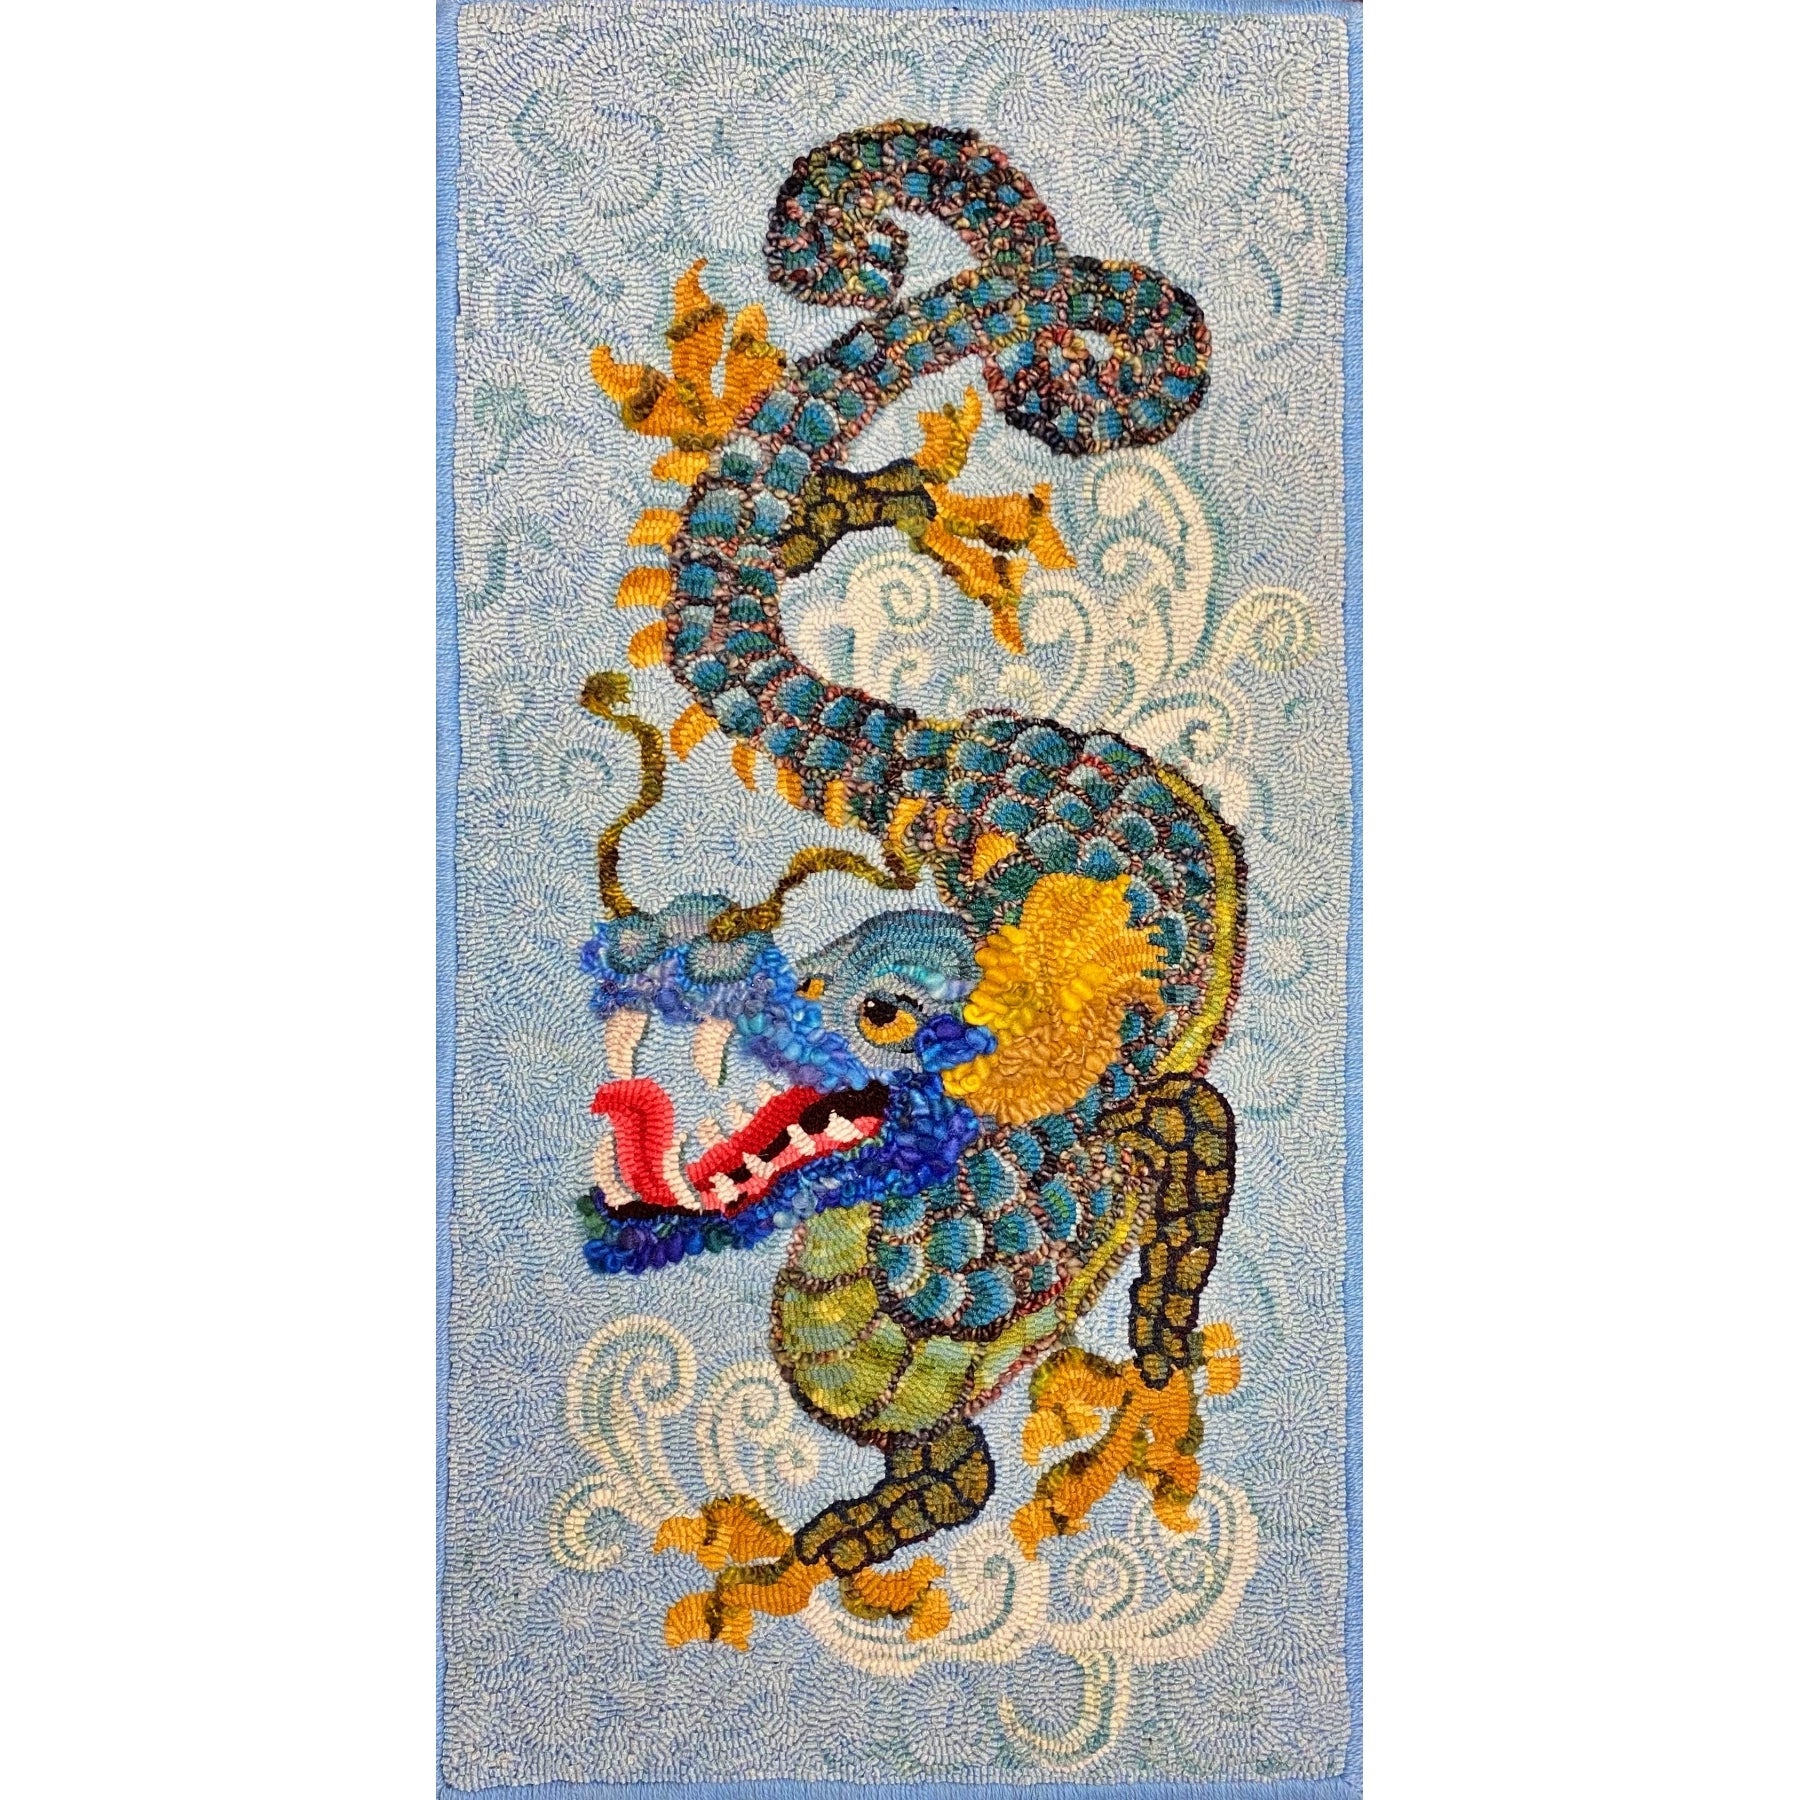 Li-Dragon, rug hooked by Linda Powell